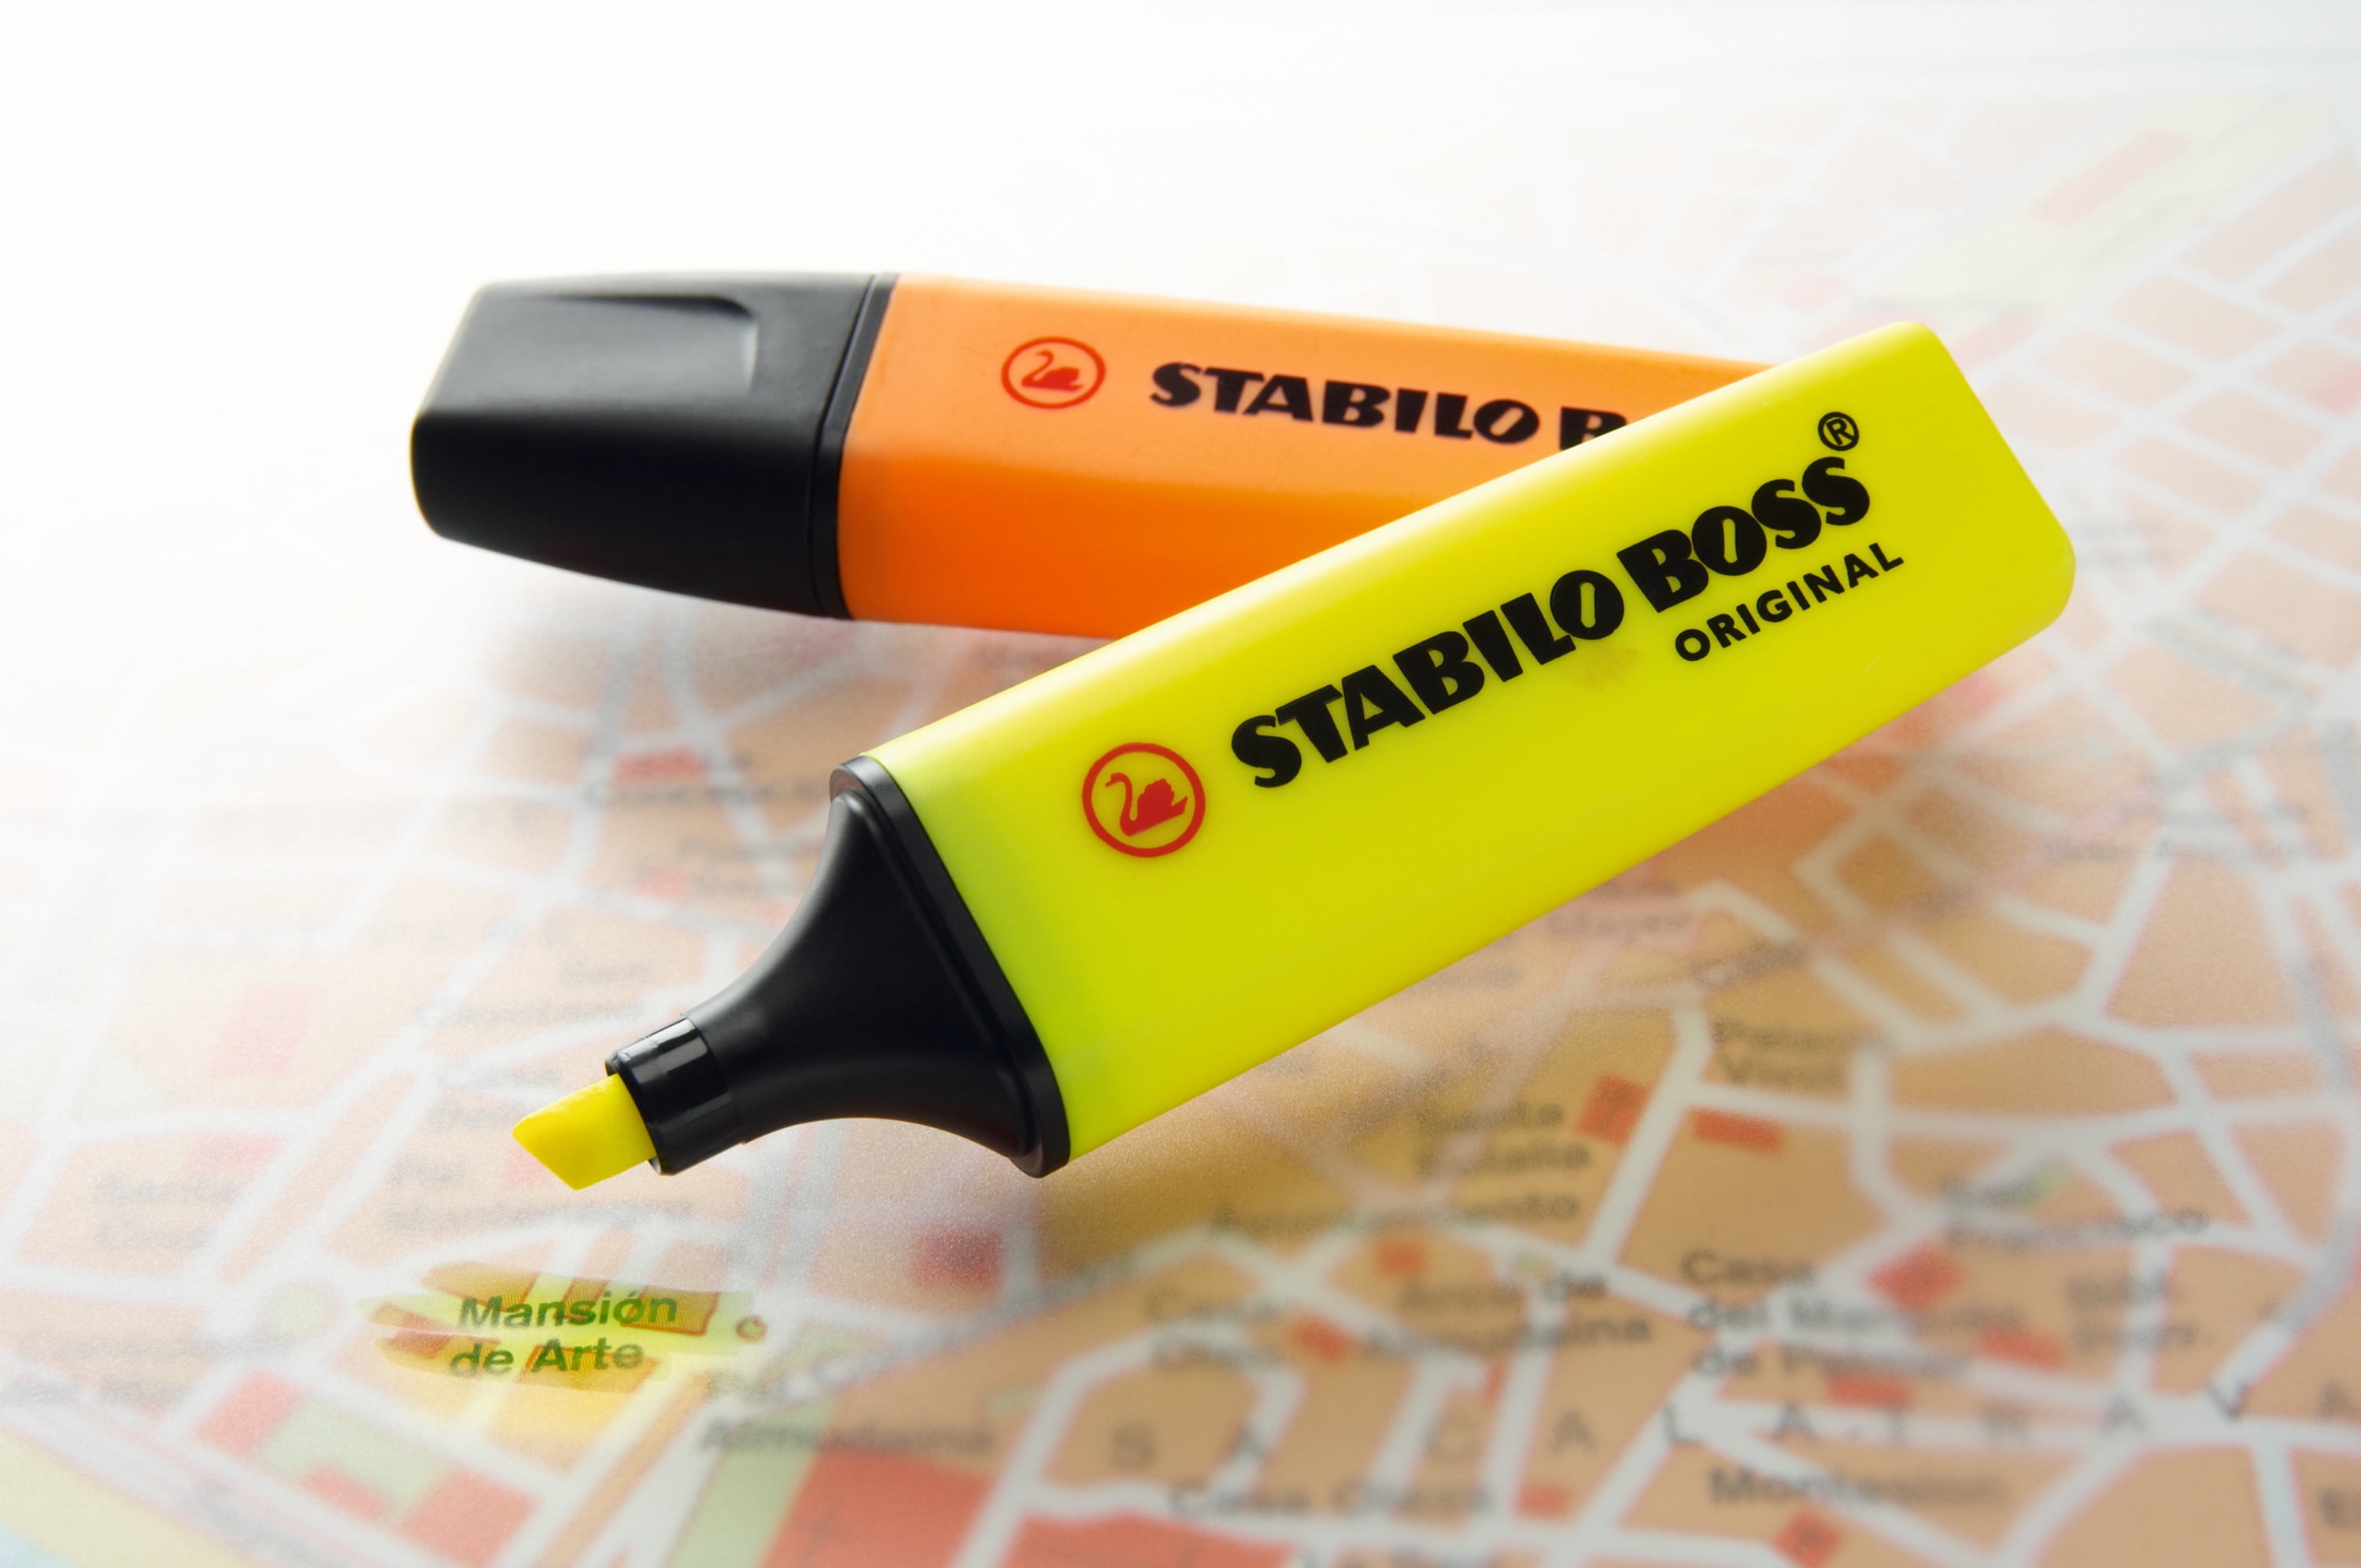  STABILO BOSS Original Pastel Highlighter Pens Highlighter  Markers - Full Range Set of 6 in Wallet : Office Products